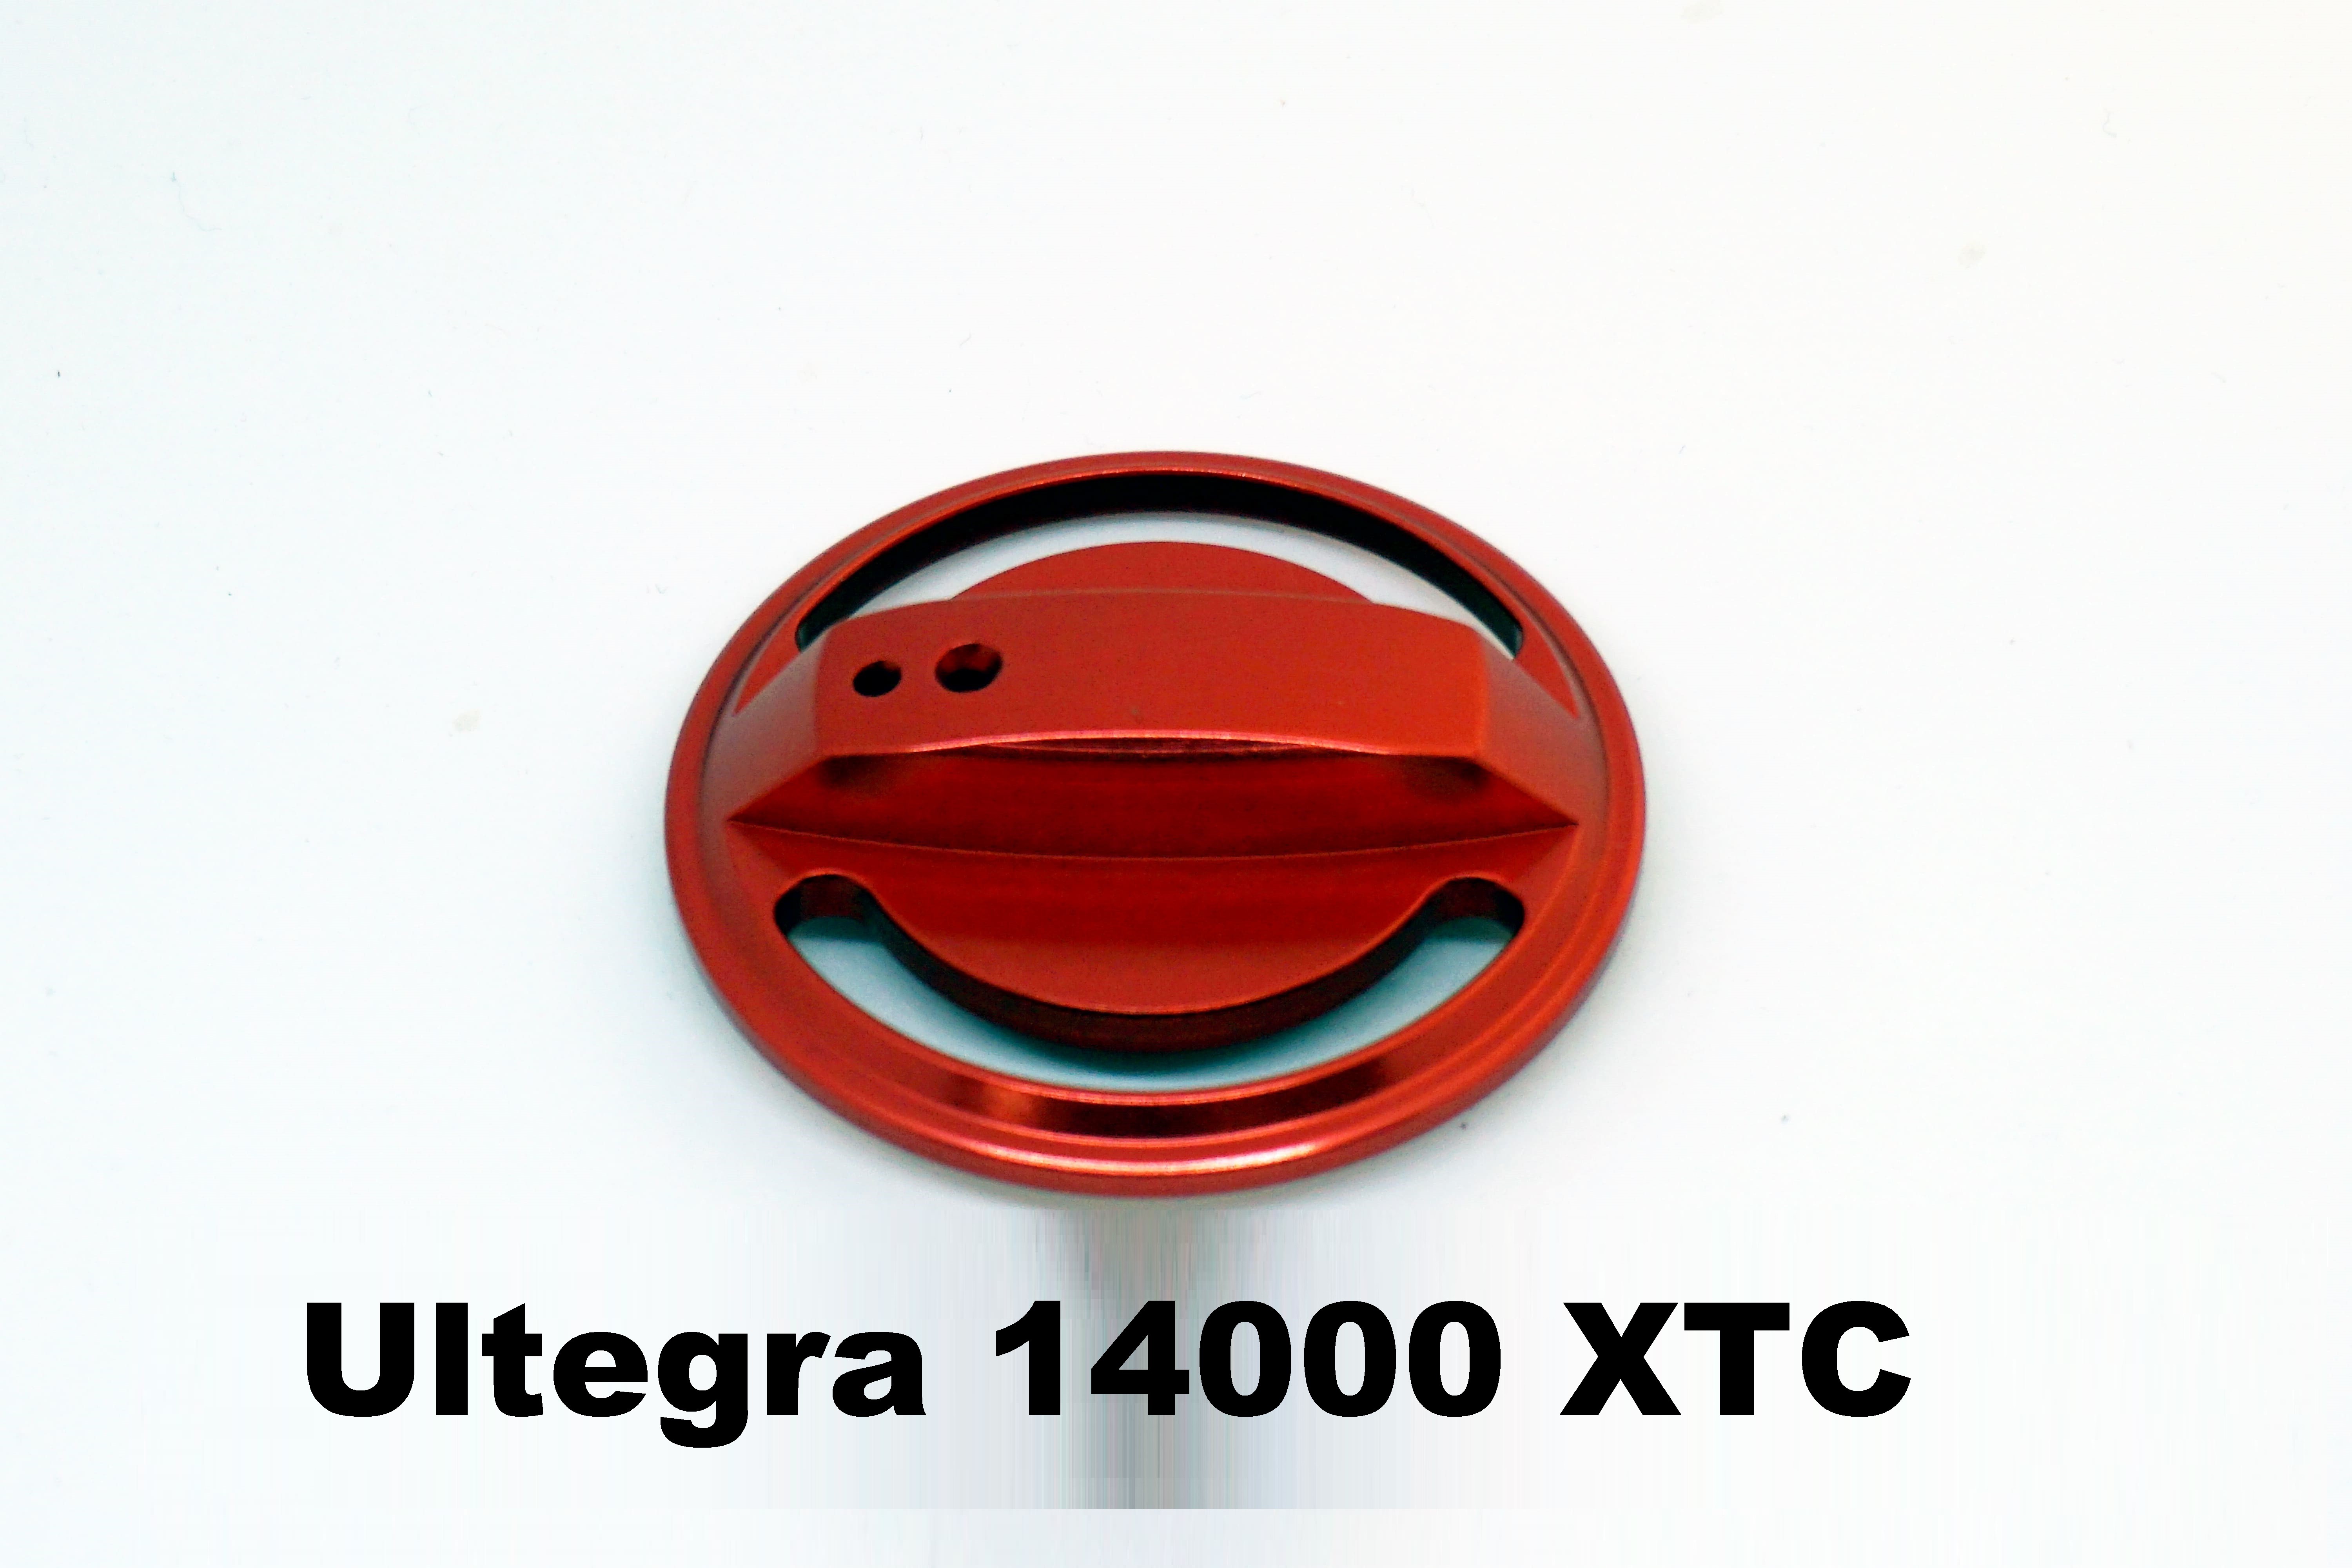 Bremsenknopf für Brandungsrolle Ultegra 14000 XTC